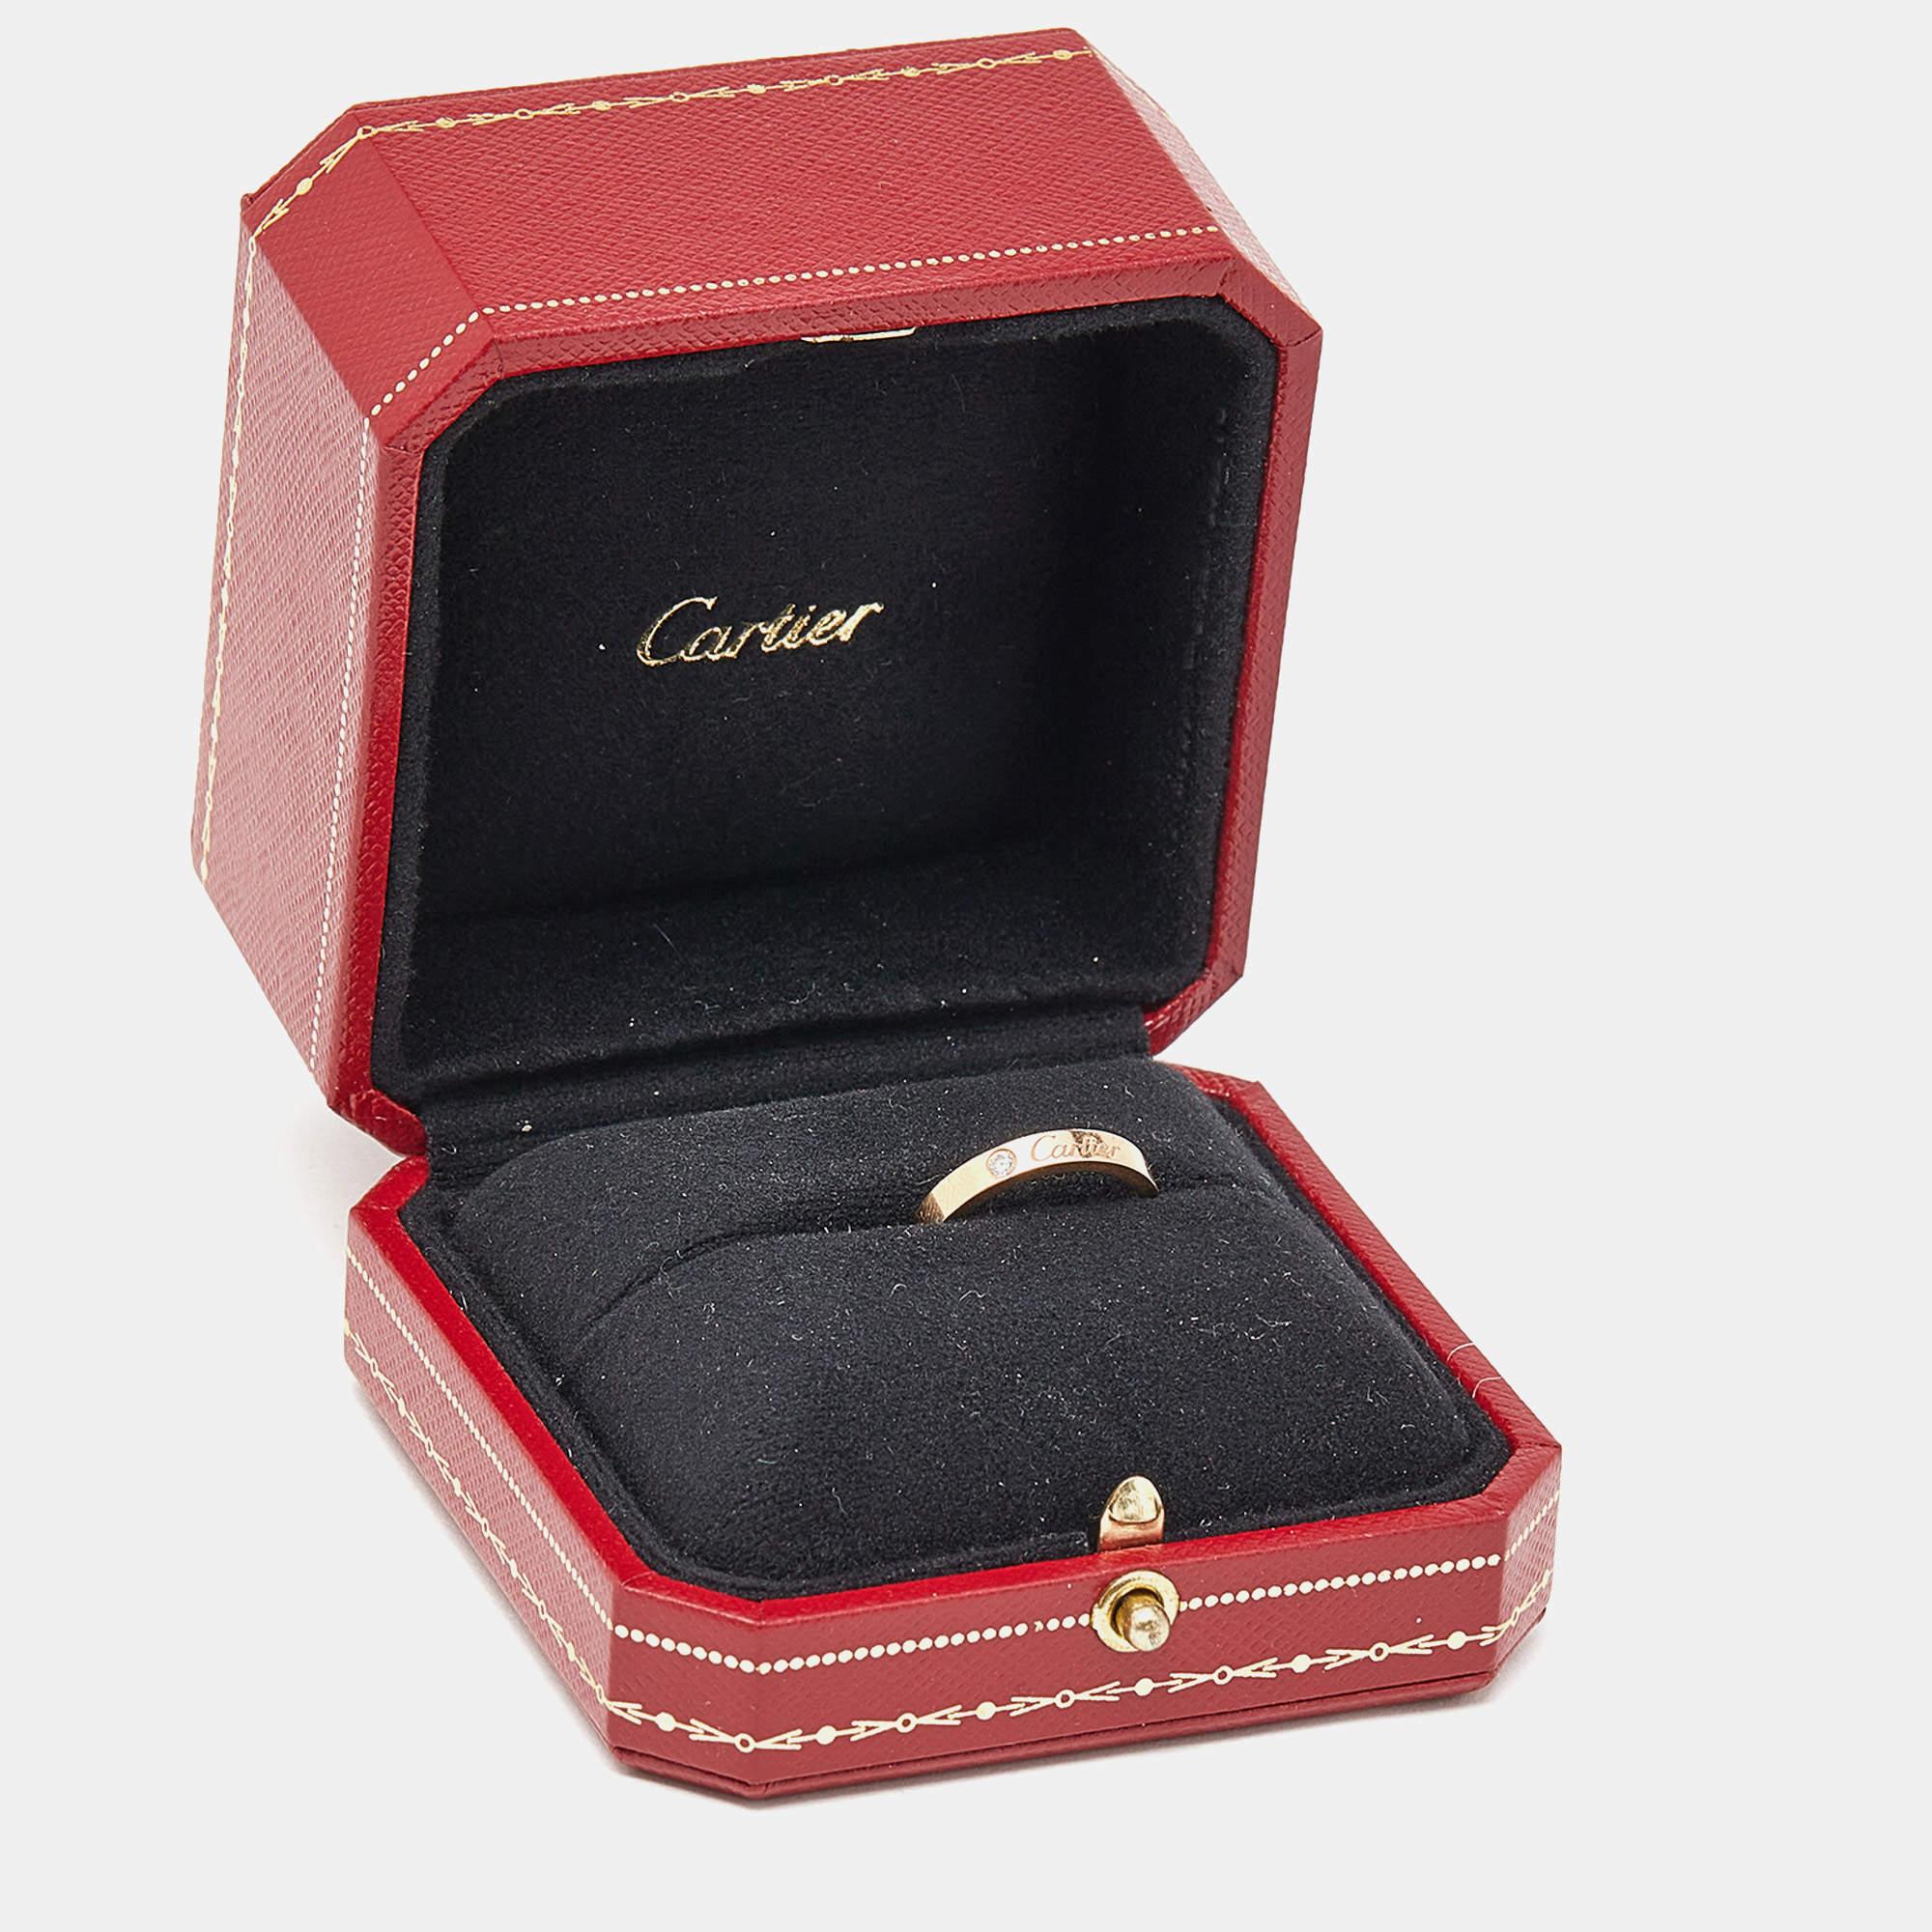 Cartier C De Cartier Diamond 18k Rose Gold Ring Size 50 5